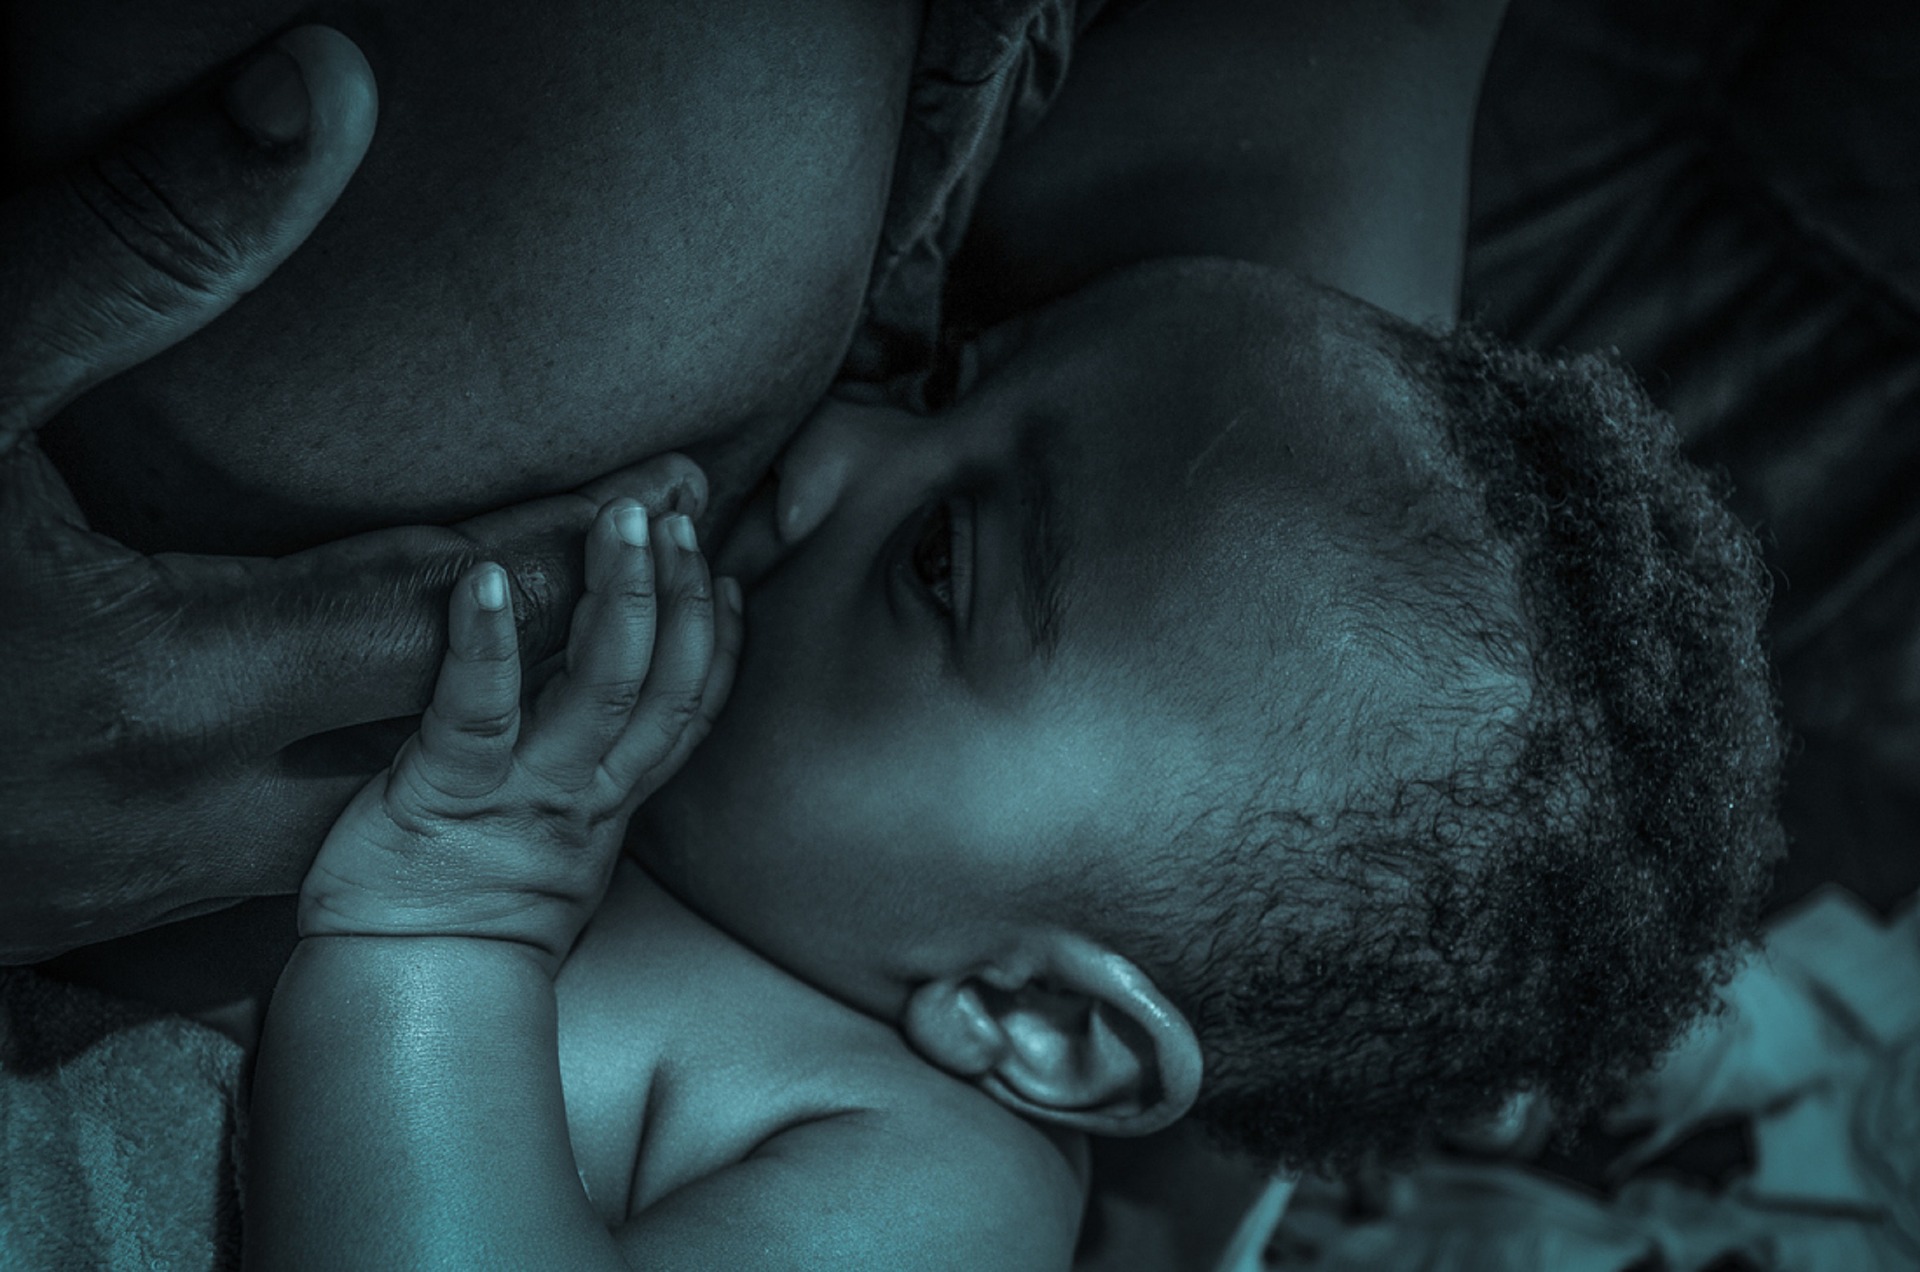 A Black mother breastfeeding her infant